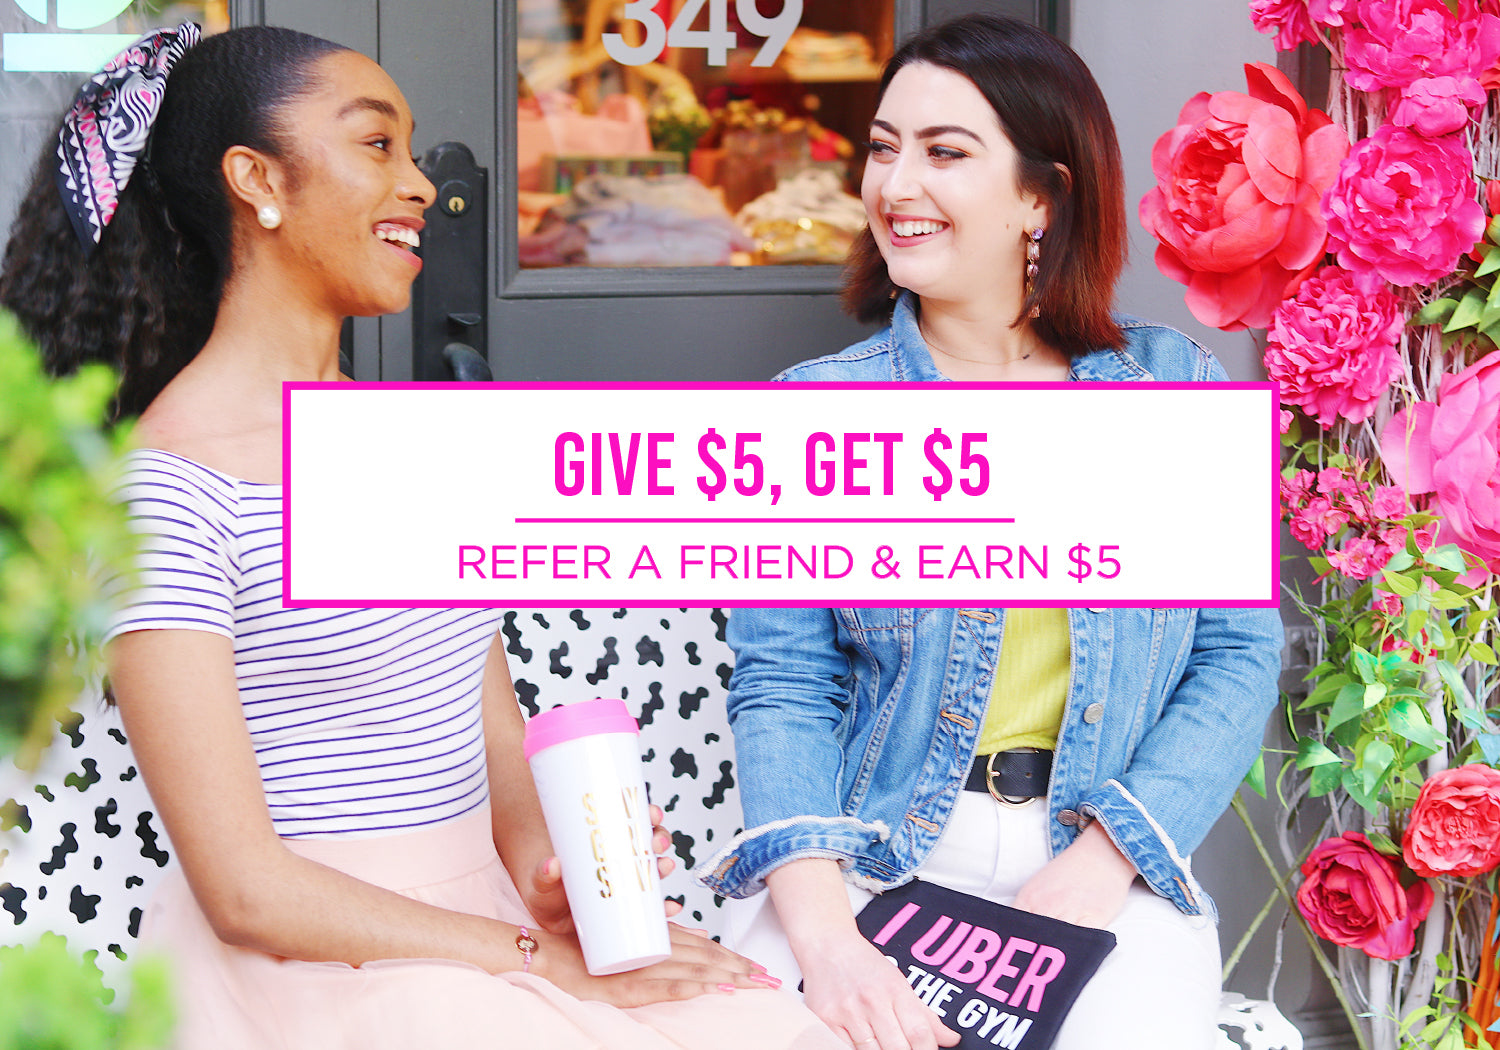 Share the love & earn $5!